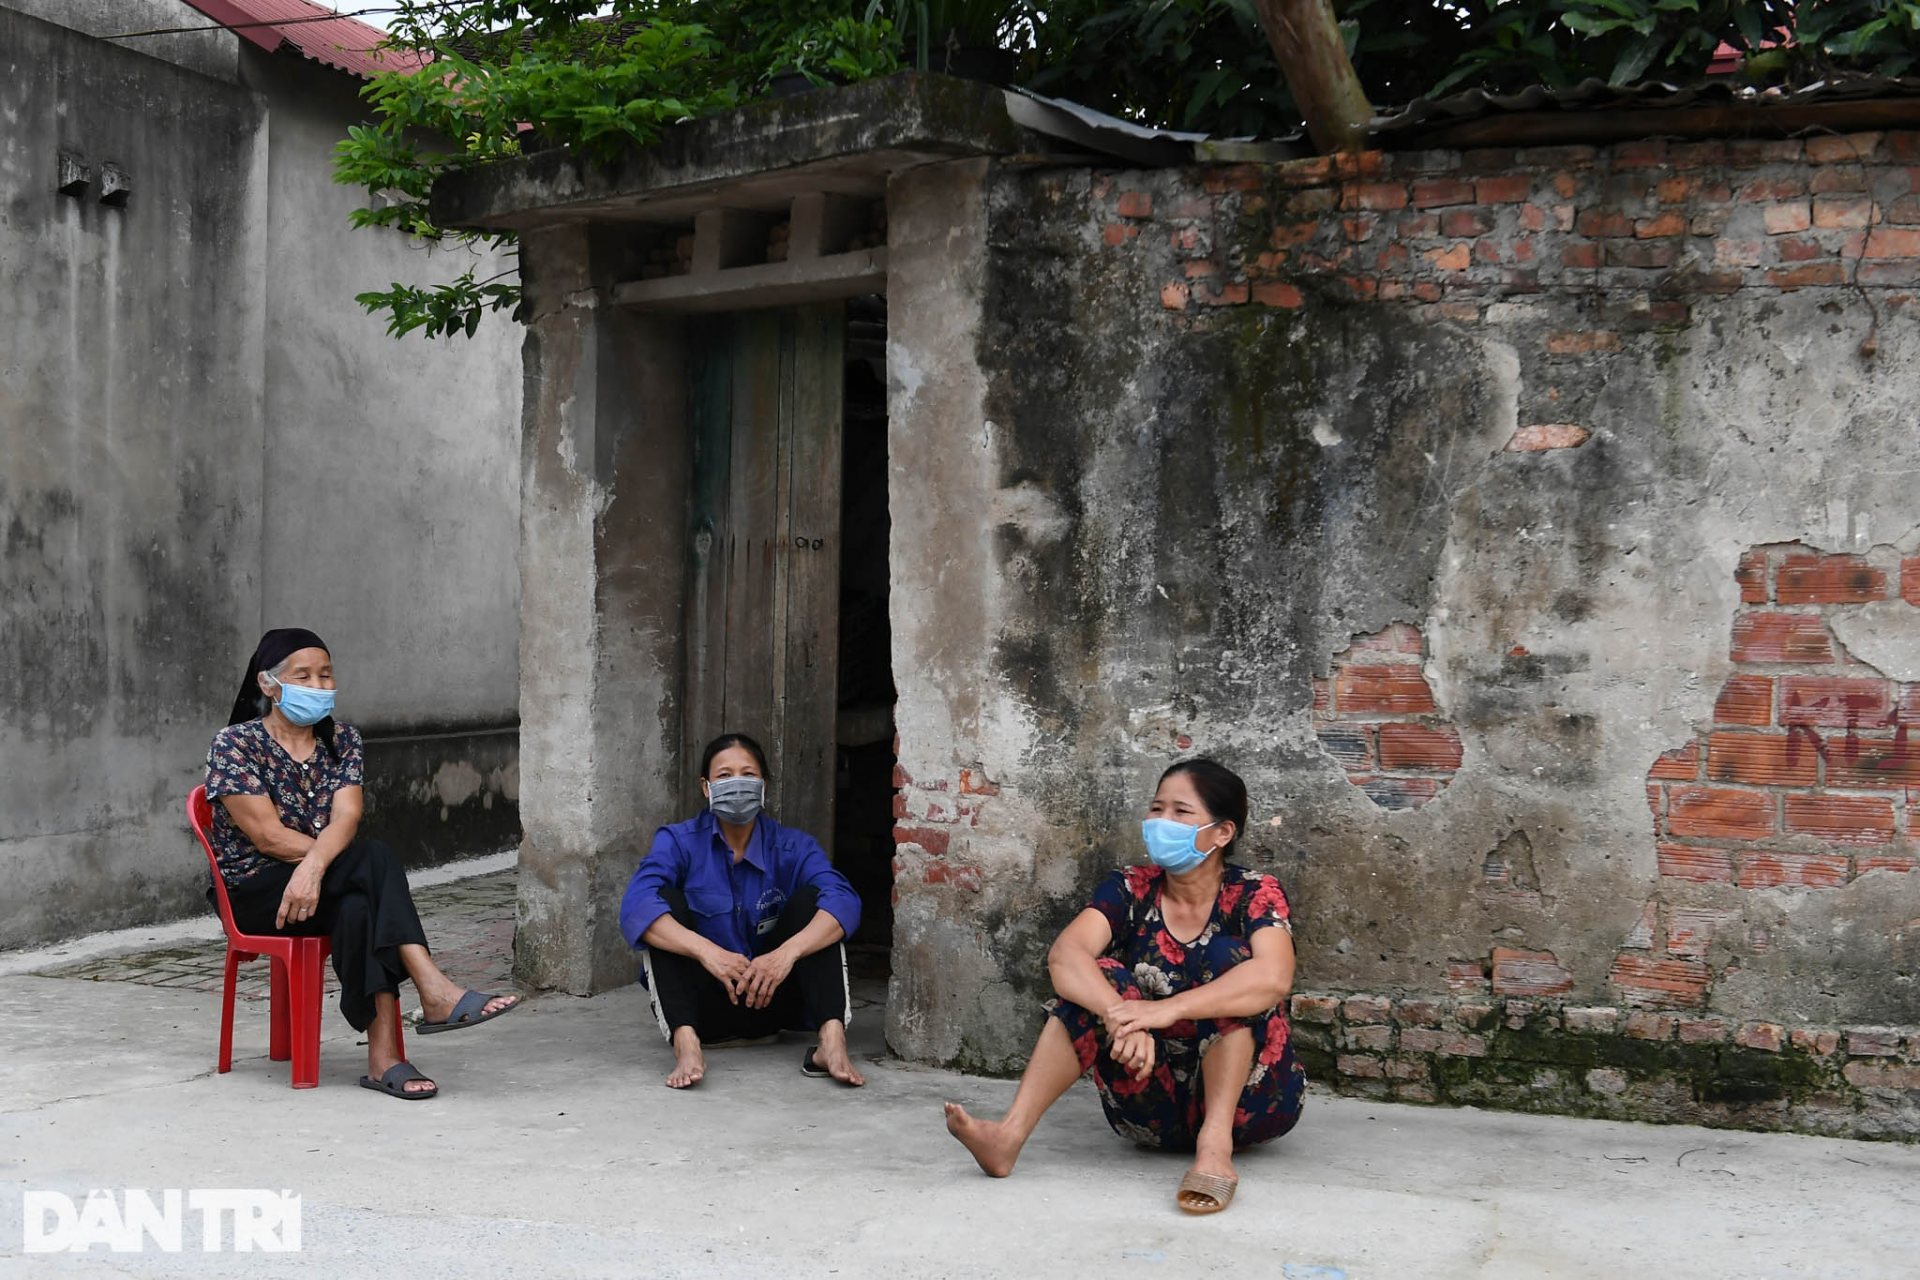 Inside the Covid-19 blockaded village outskirts of Hanoi